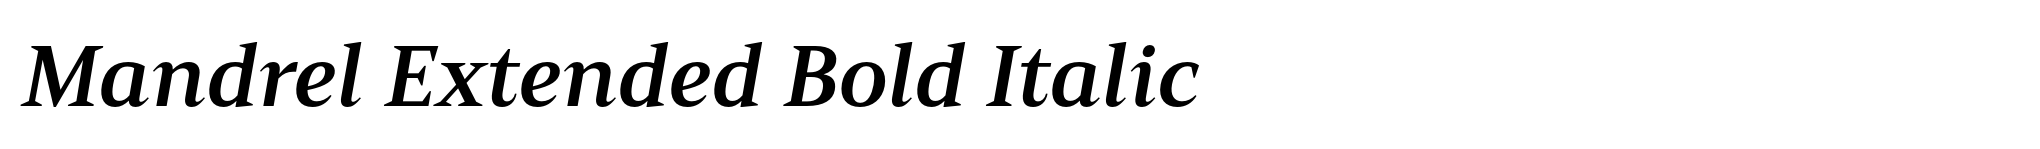 Mandrel Extended Bold Italic image